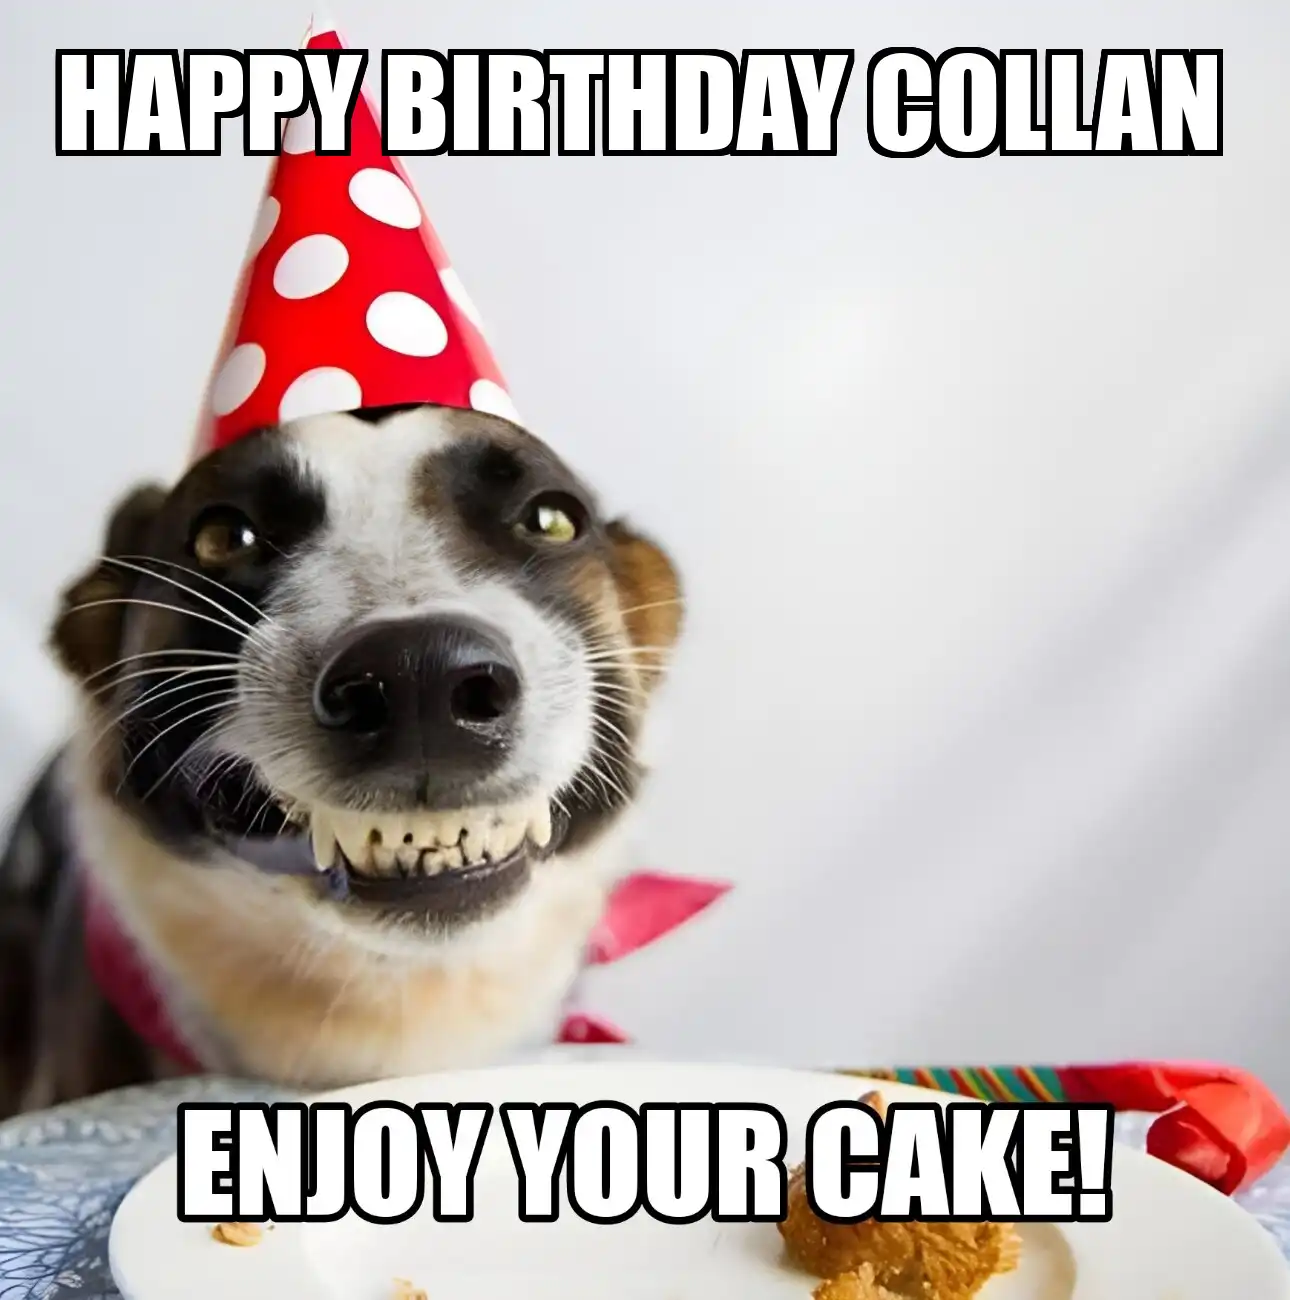 Happy Birthday Collan Enjoy Your Cake Dog Meme